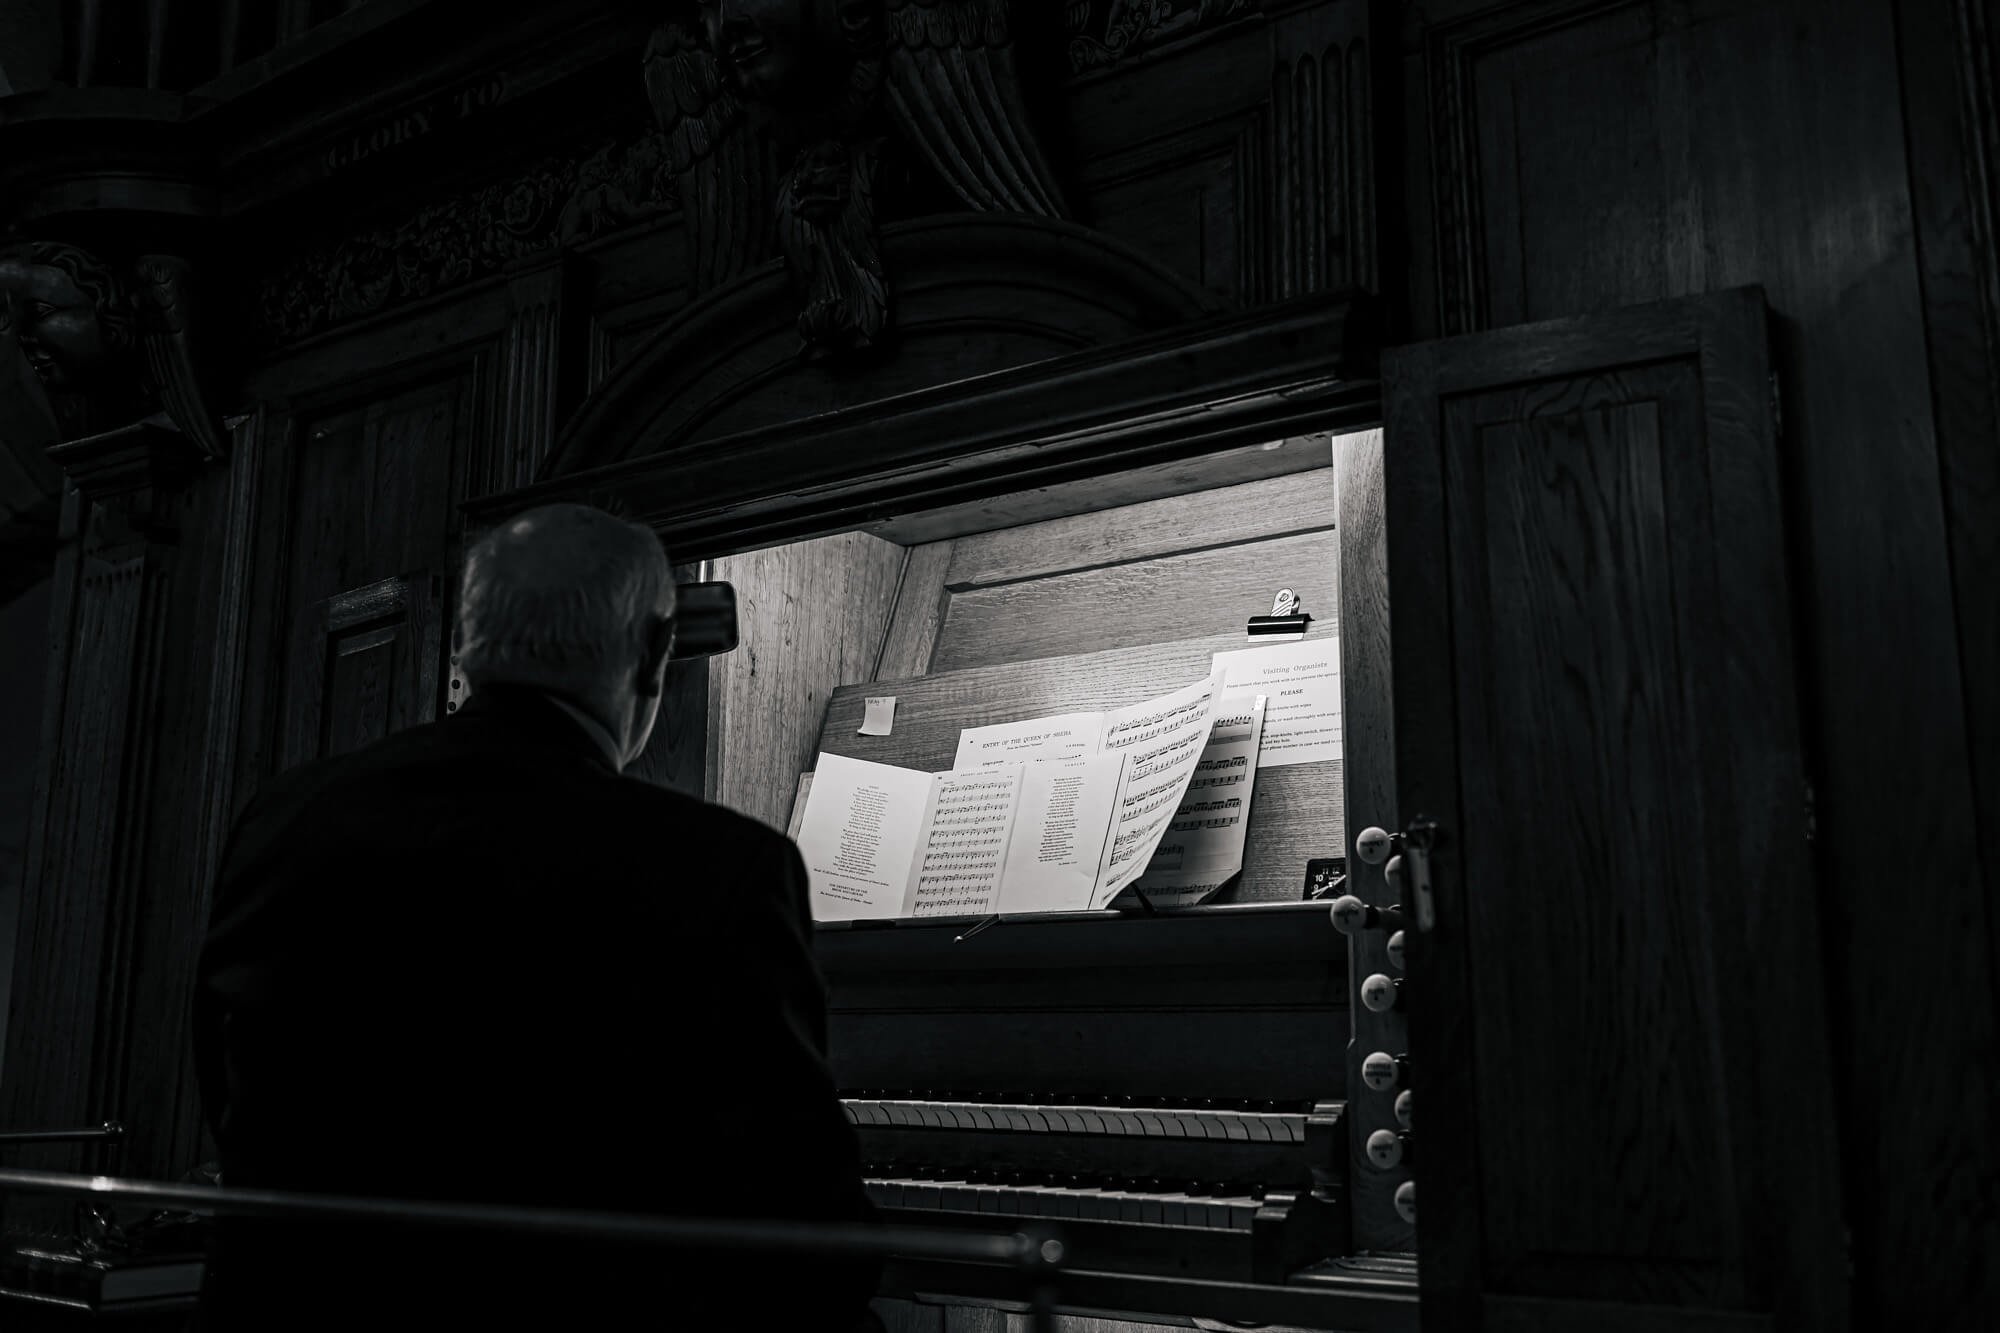 The church organist performs for a Cumbrian wedding